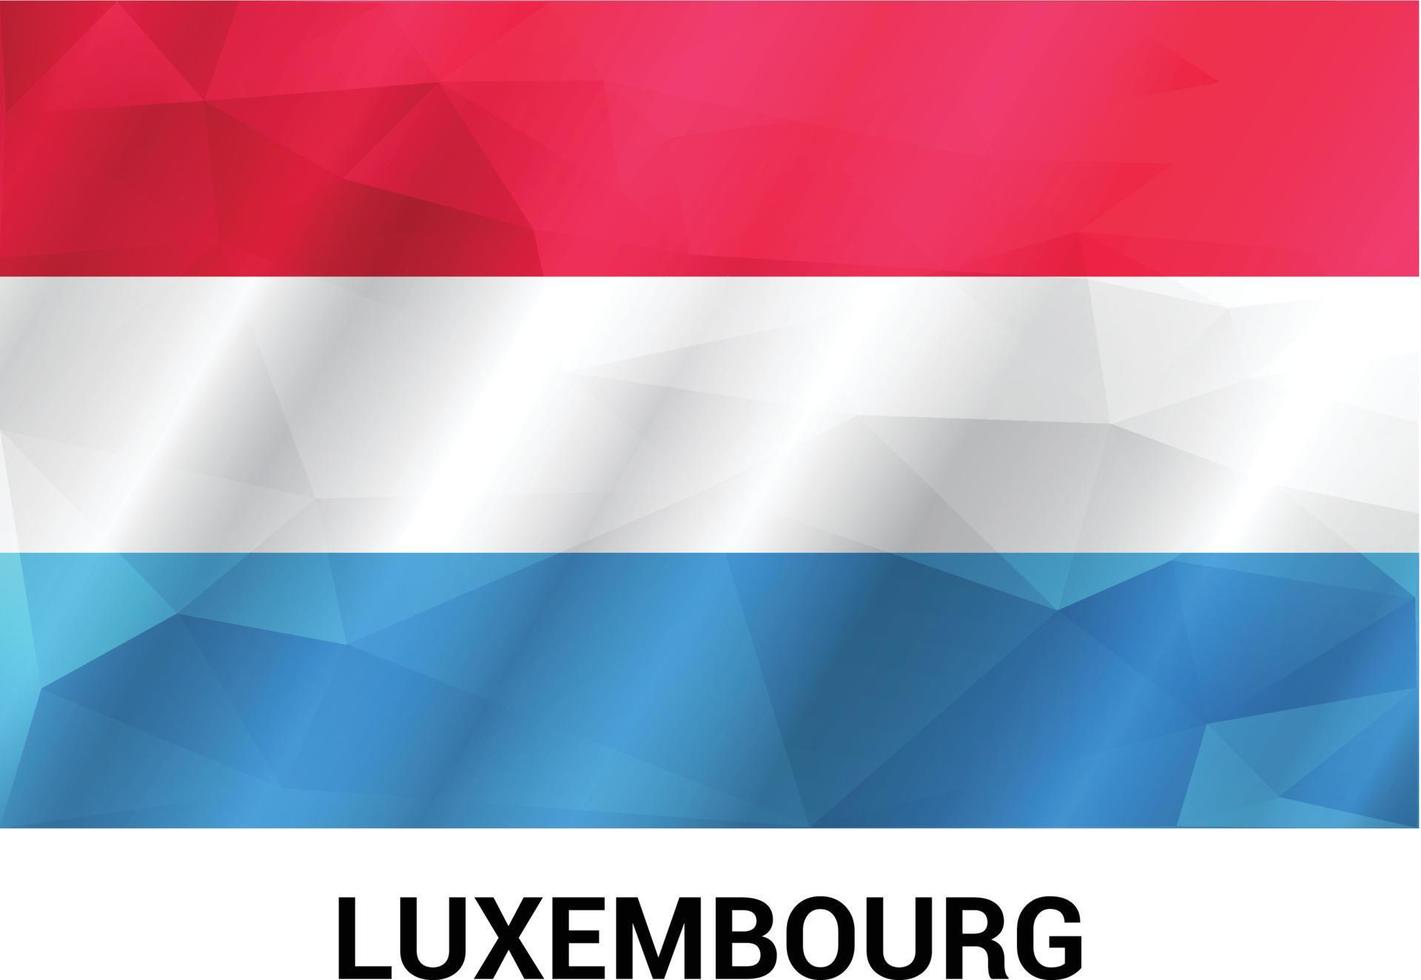 luxemburg flagga design vektor